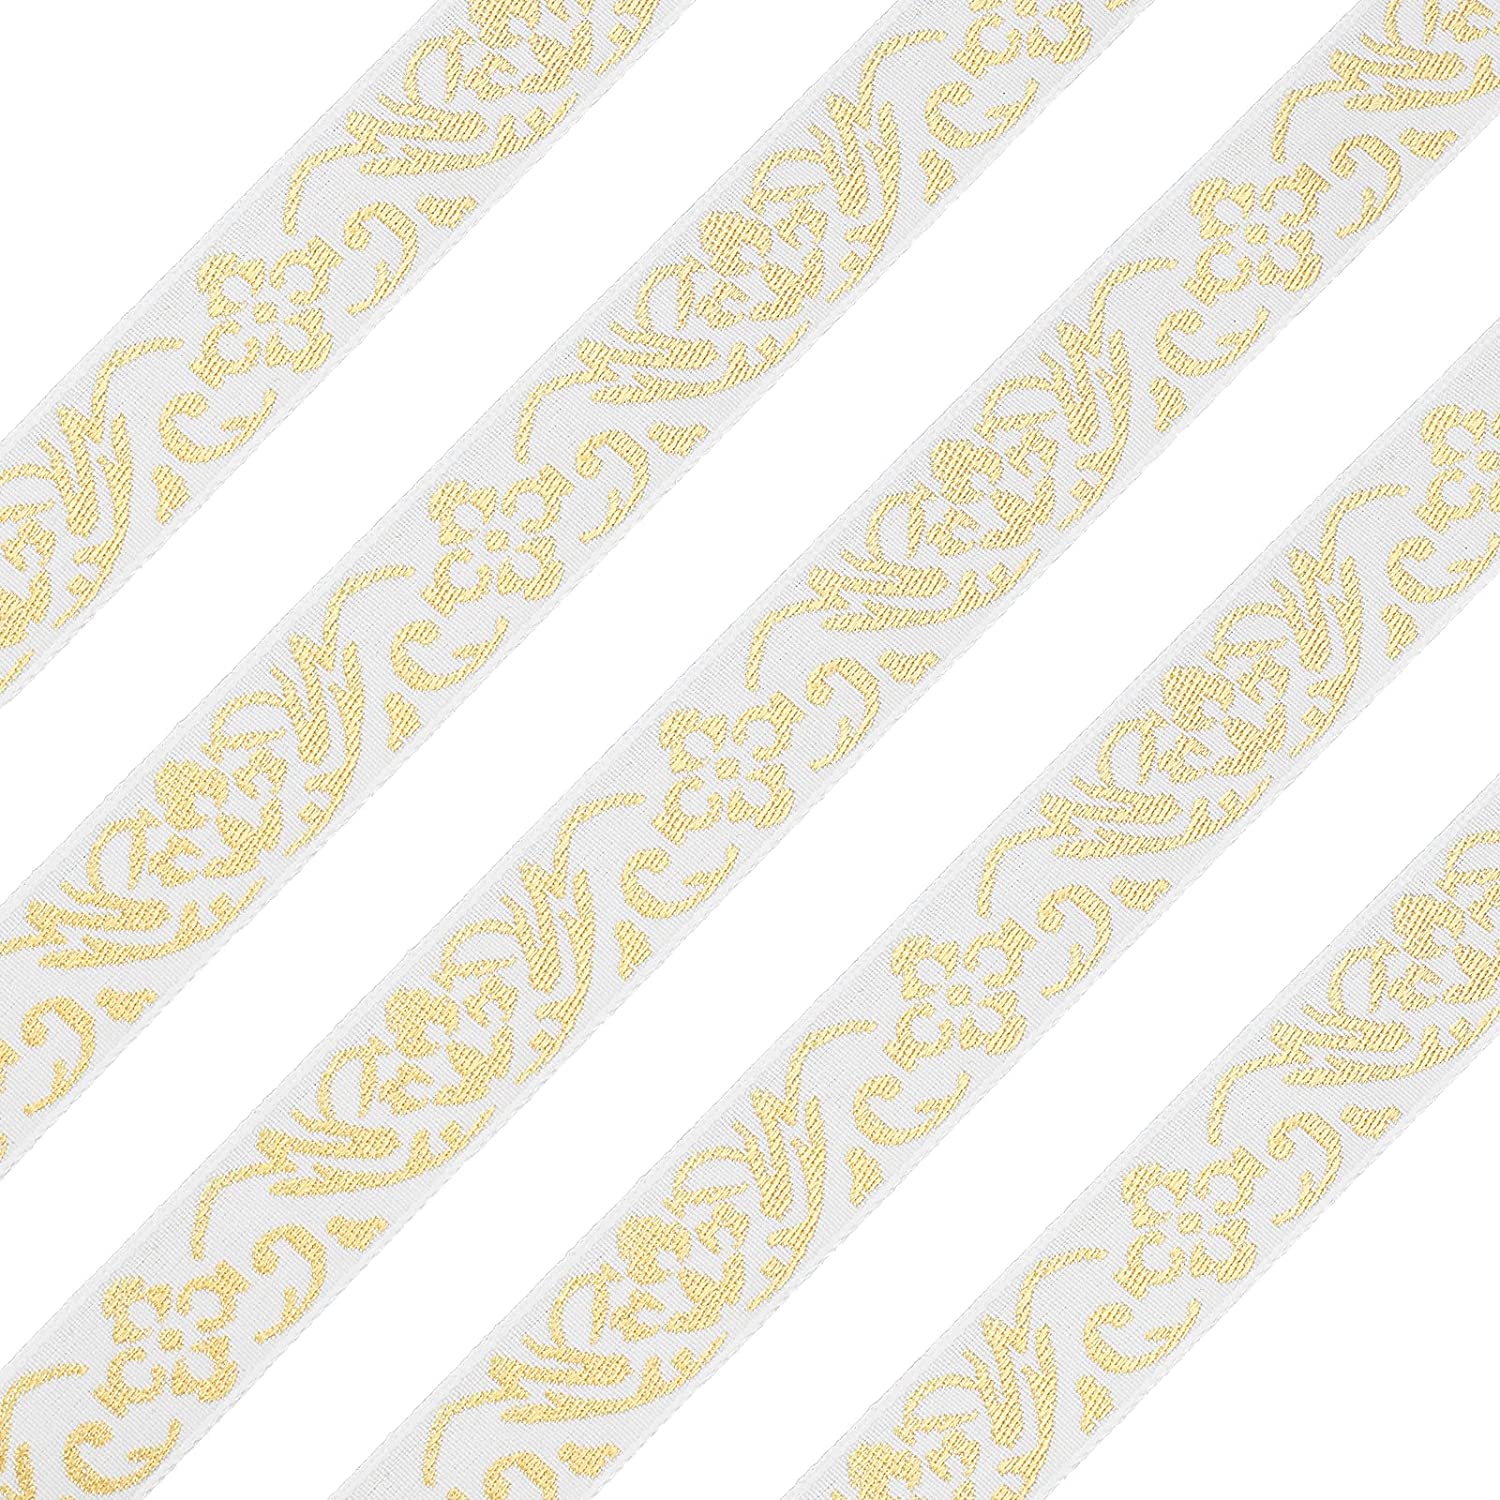 20 Yard Vintage Jacquard Ribbon White Jacquard Trim Emobridered Woven Trim 20mm Wide Gold Floral Webbing Ribbon for DIY Clothing Accessories Embellishment Decorations